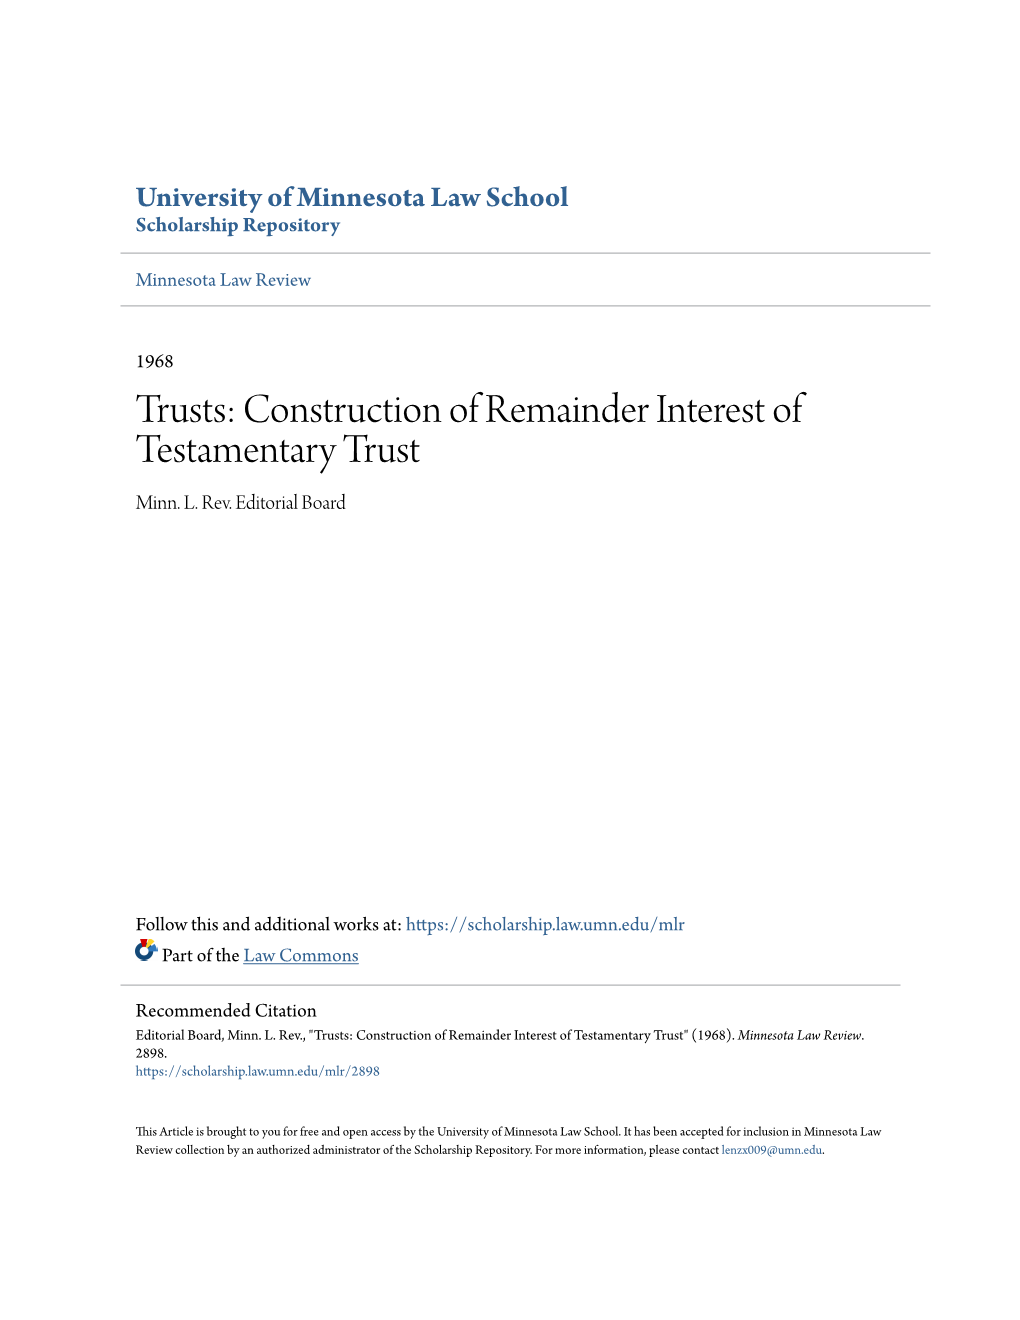 Trusts: Construction of Remainder Interest of Testamentary Trust Minn